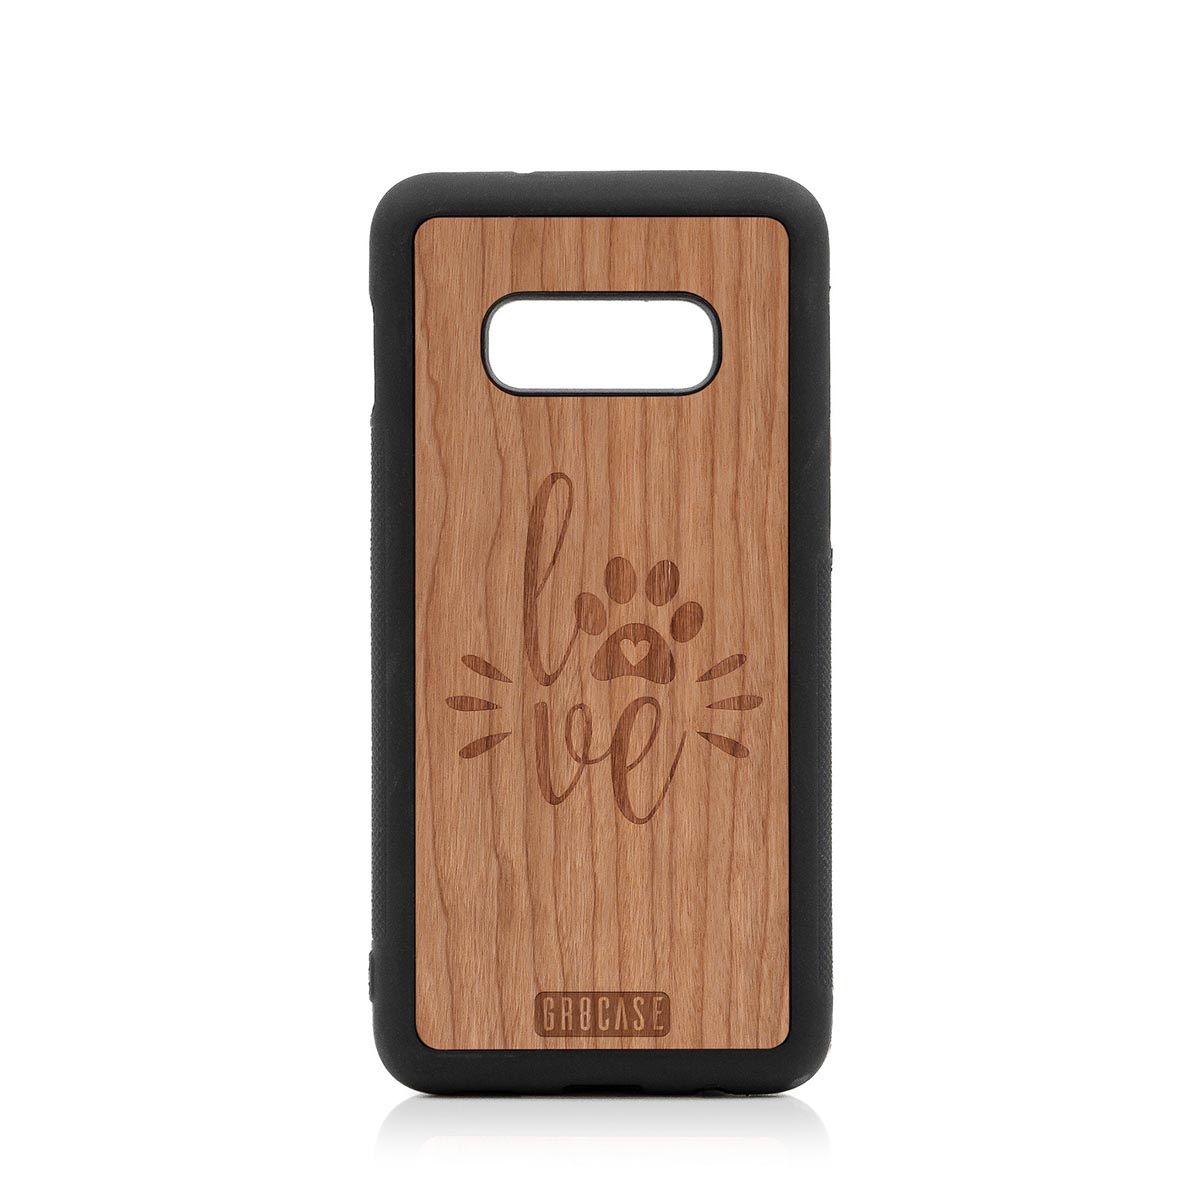 Paw Love Design Wood Case Samsung Galaxy S10E by GR8CASE